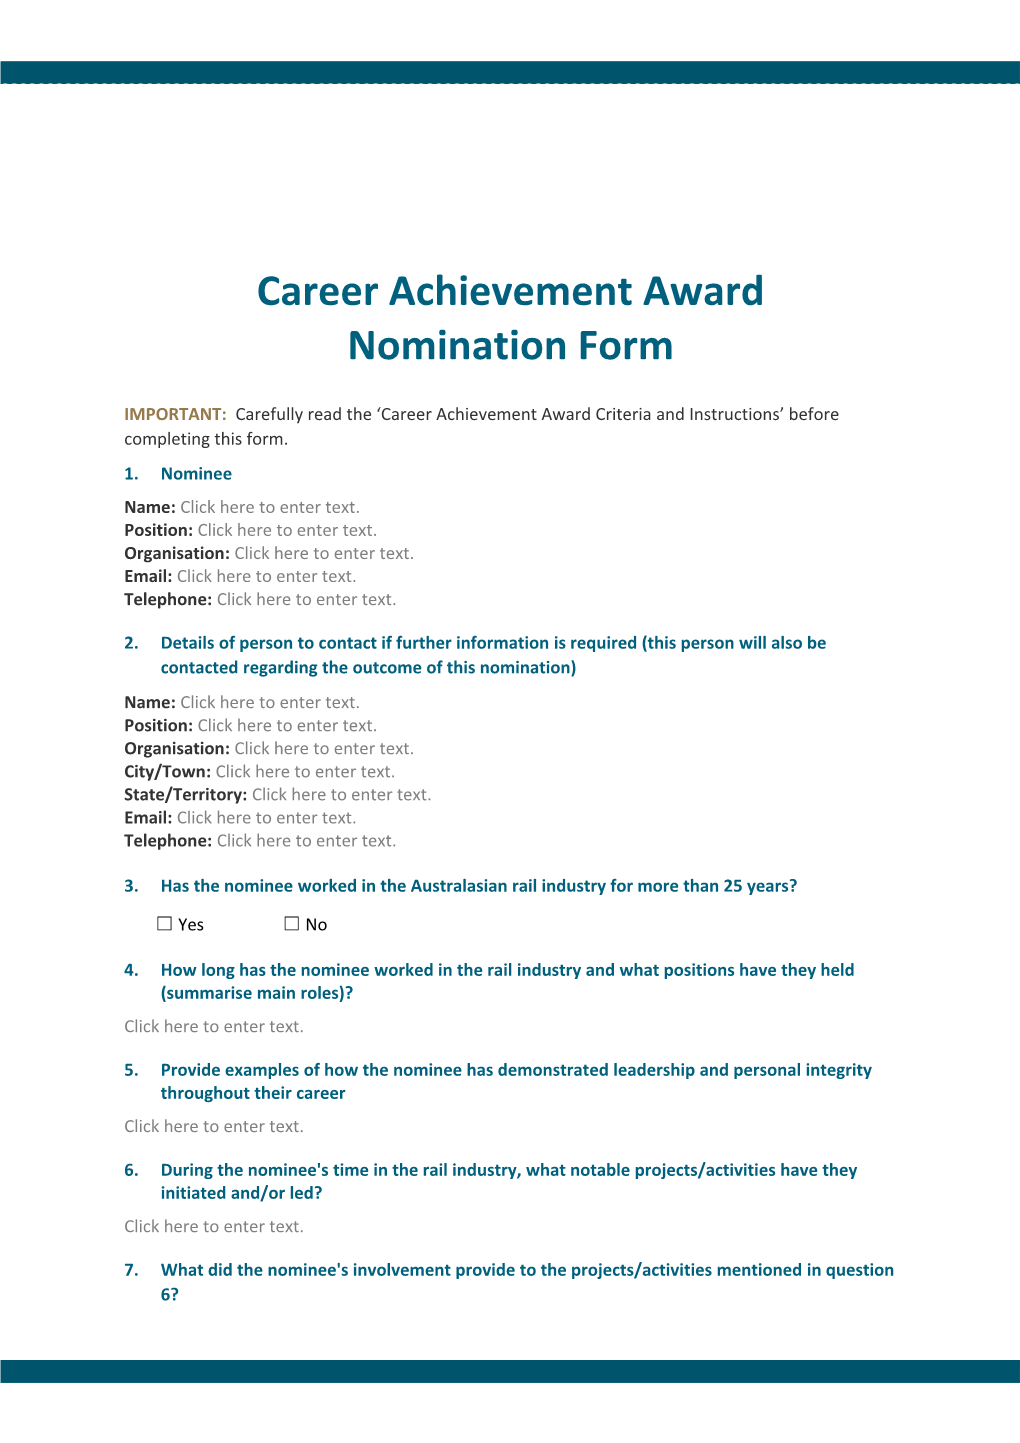 Career Achievement Award Nomination Form